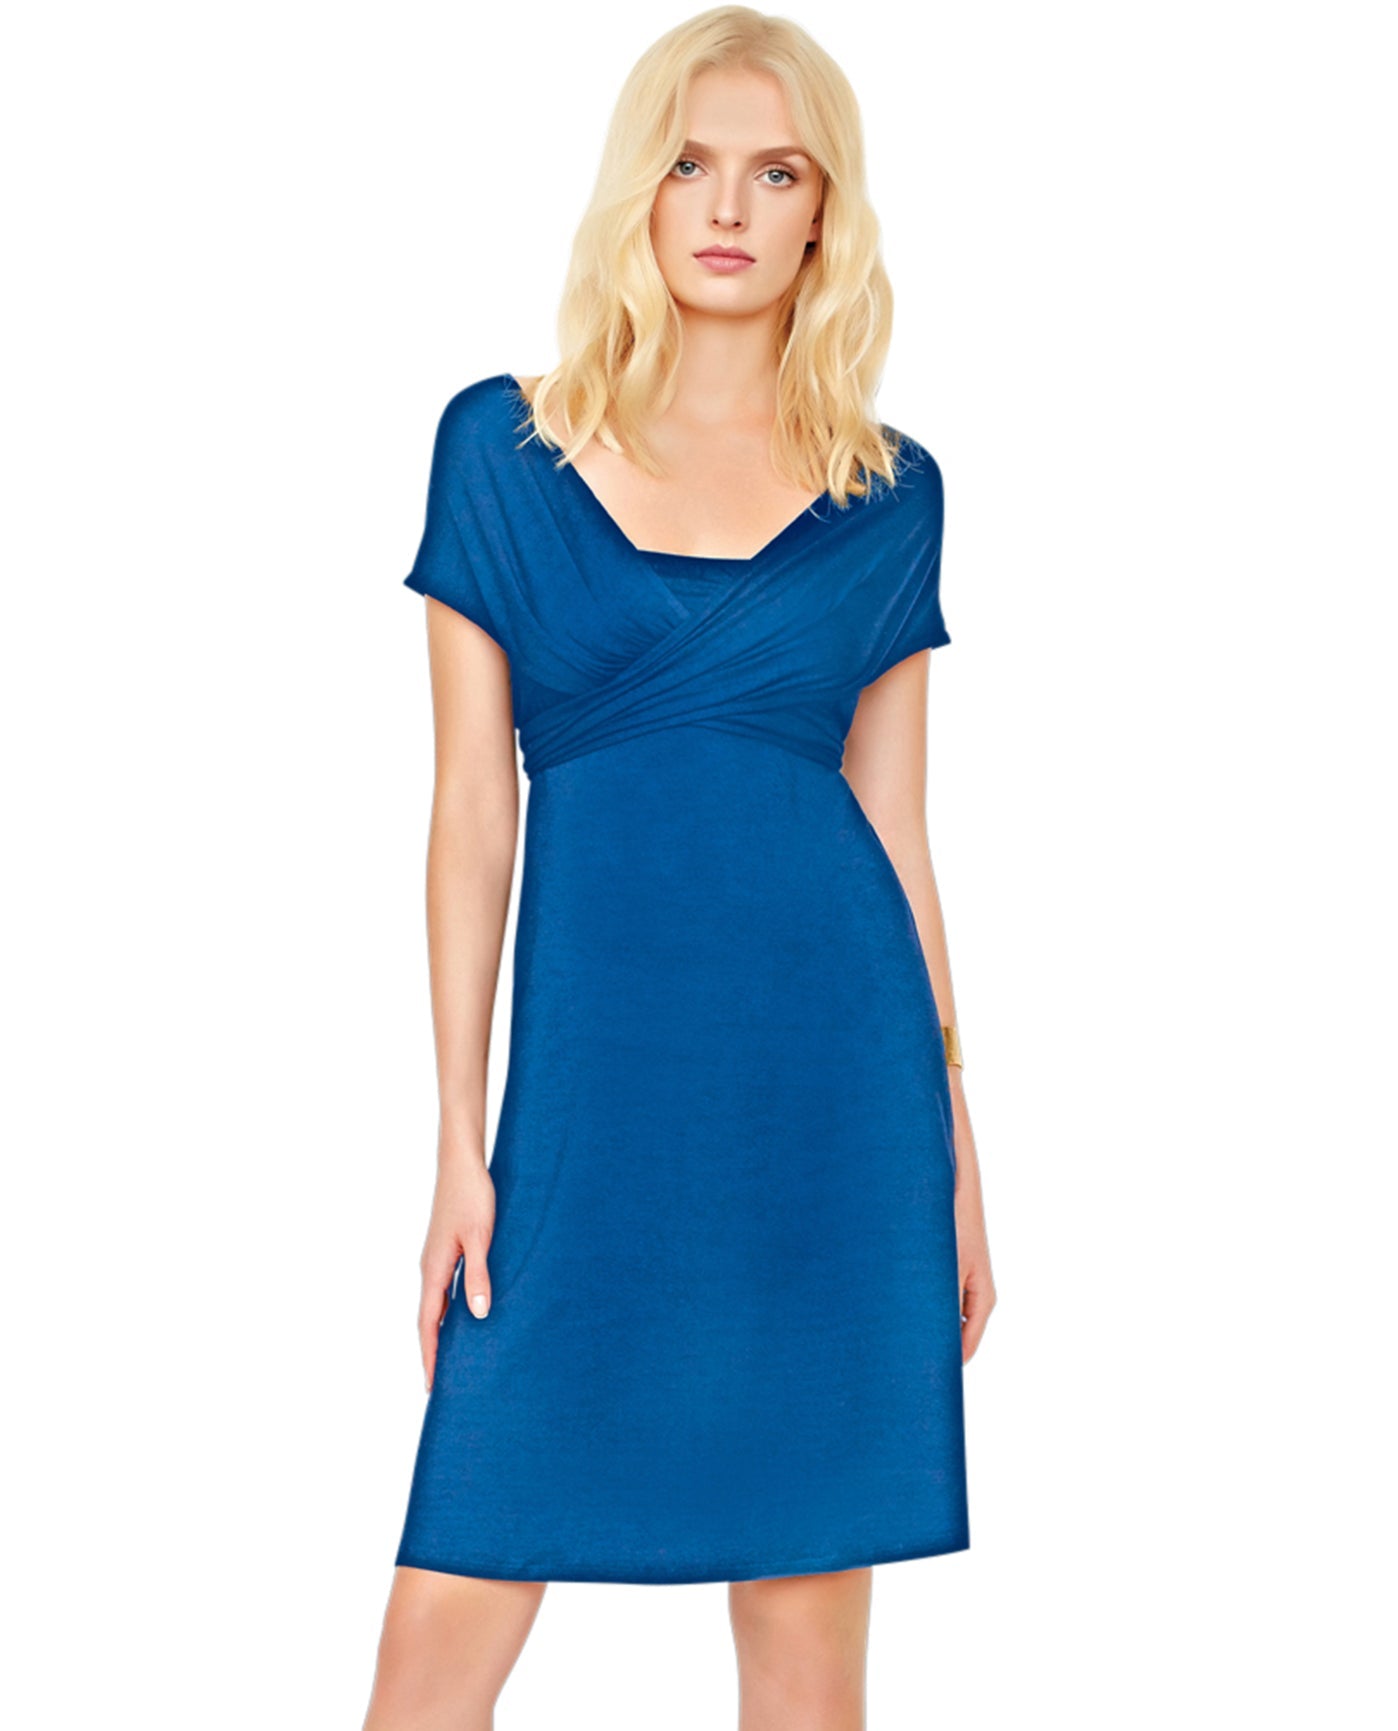 Full Dress View Of 5-in-1 Gottex Lattice Black Beach Dress | GOT Lattice Blue